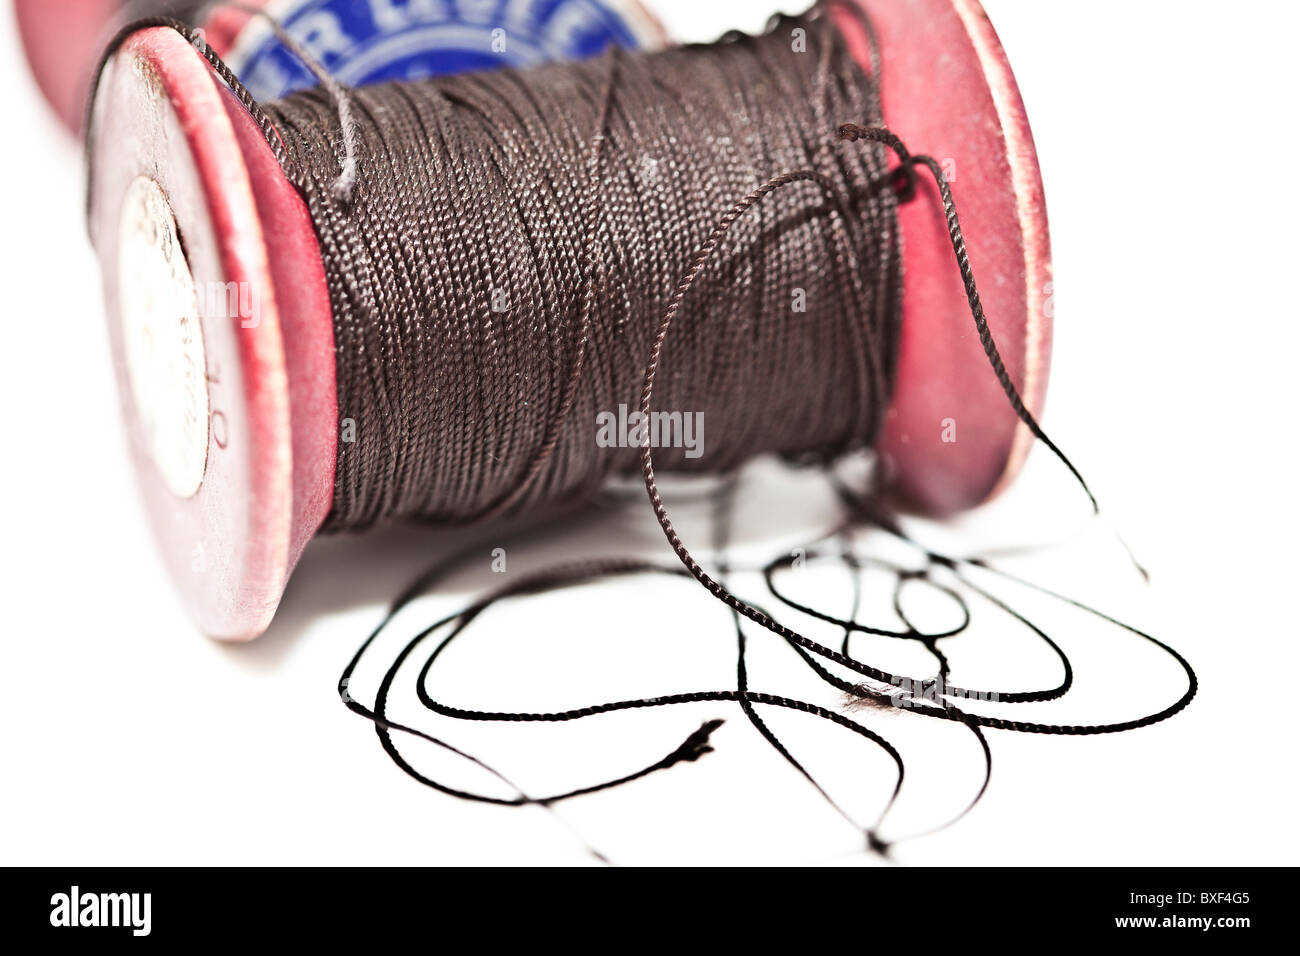 Cotton thread reel sew macro close up photograph hi-res stock